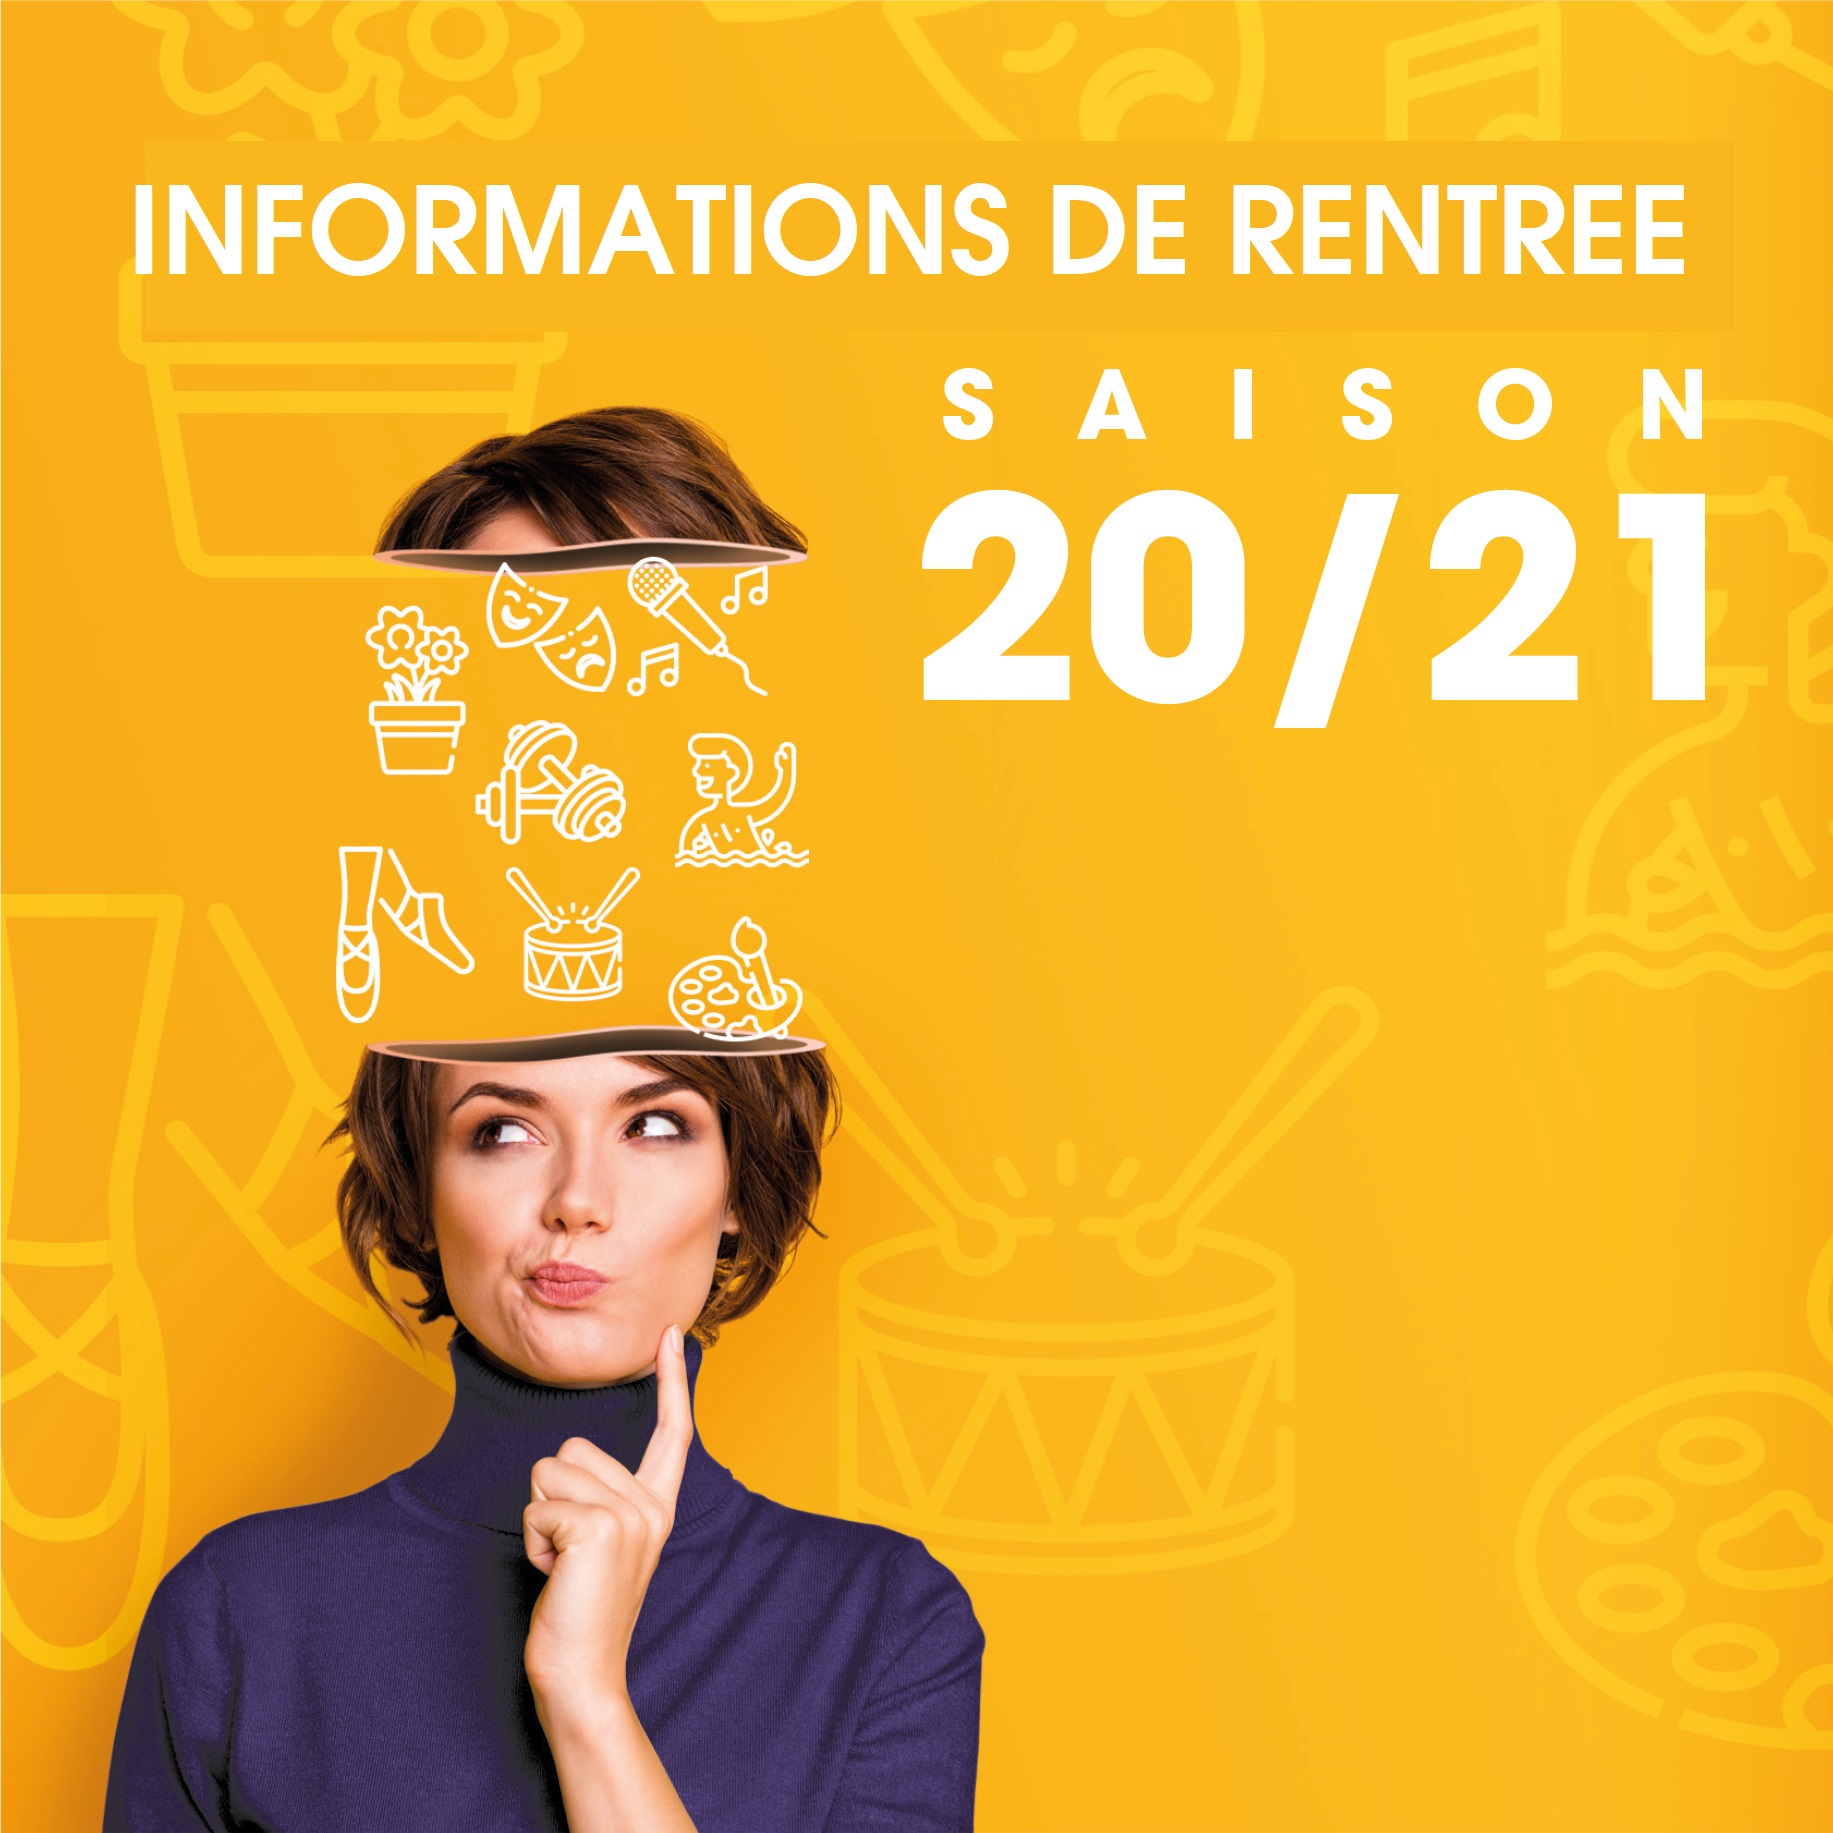 INFORMATIONS DE RENTRÉE 2020-2021